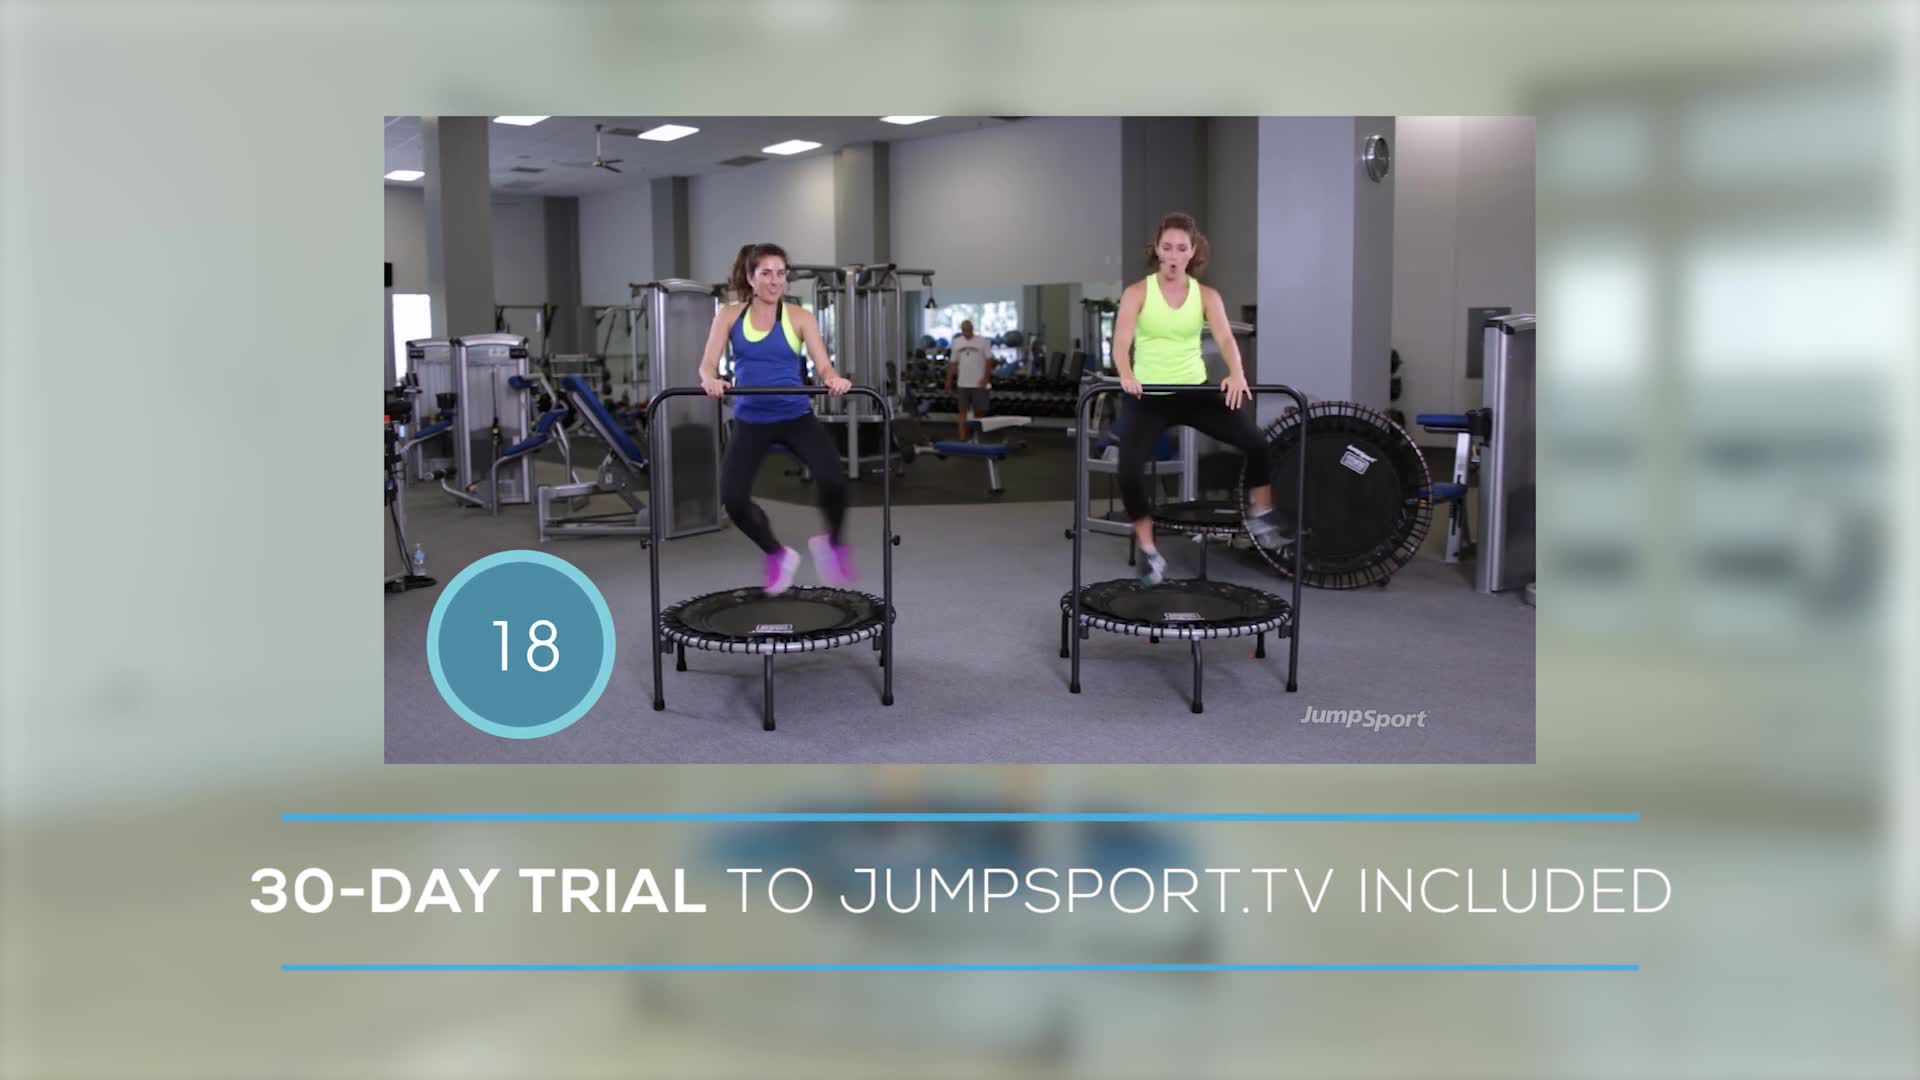 35-1825 JumpSport 125 Home Fitness Trampoline on Vimeo